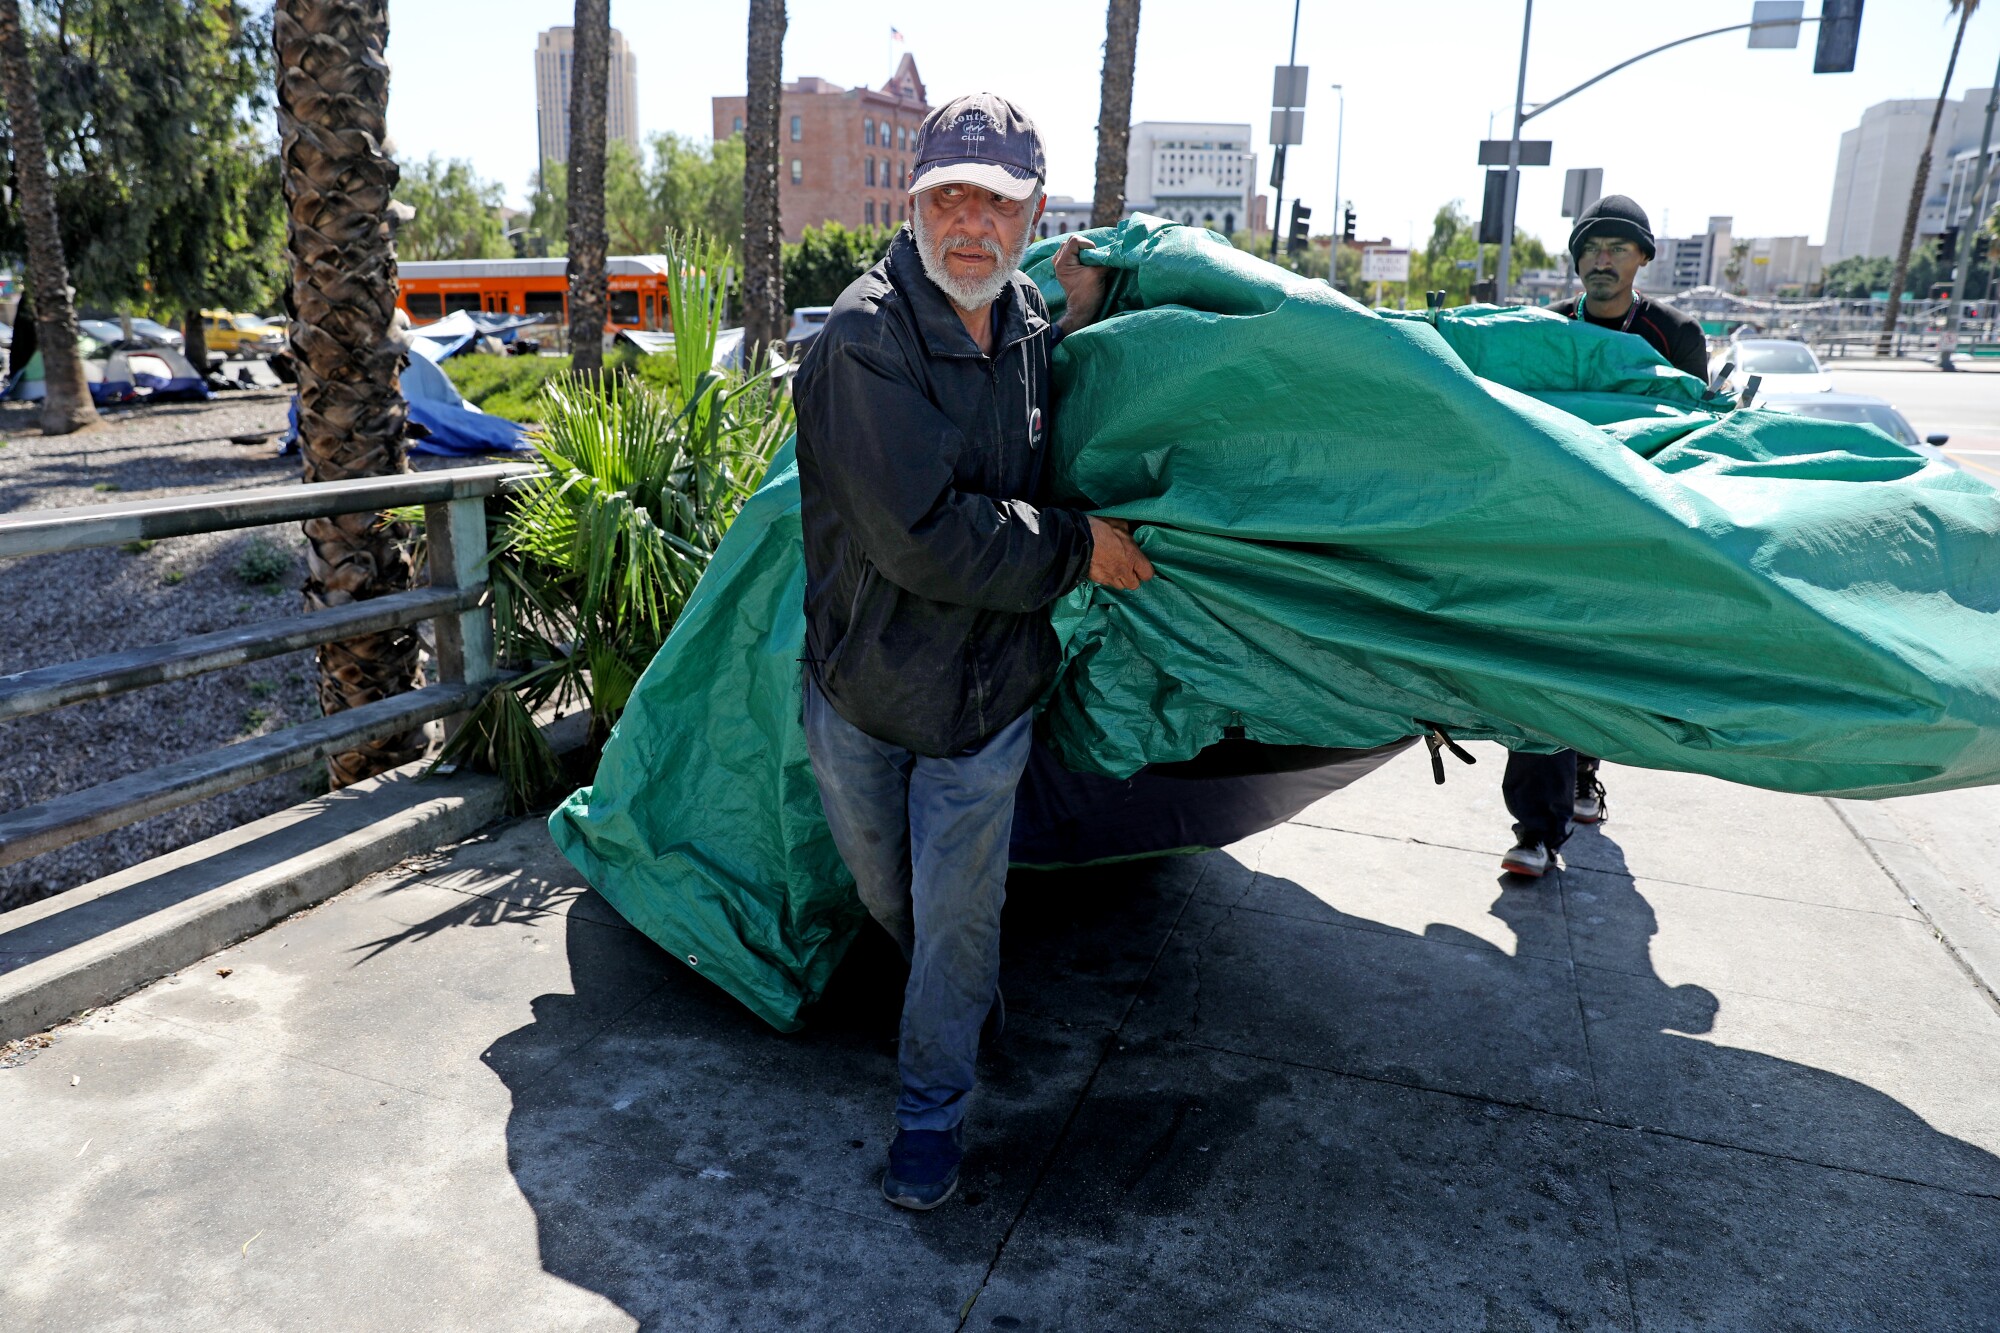 A man gets help carrying a large green tarp down a sidewalk.